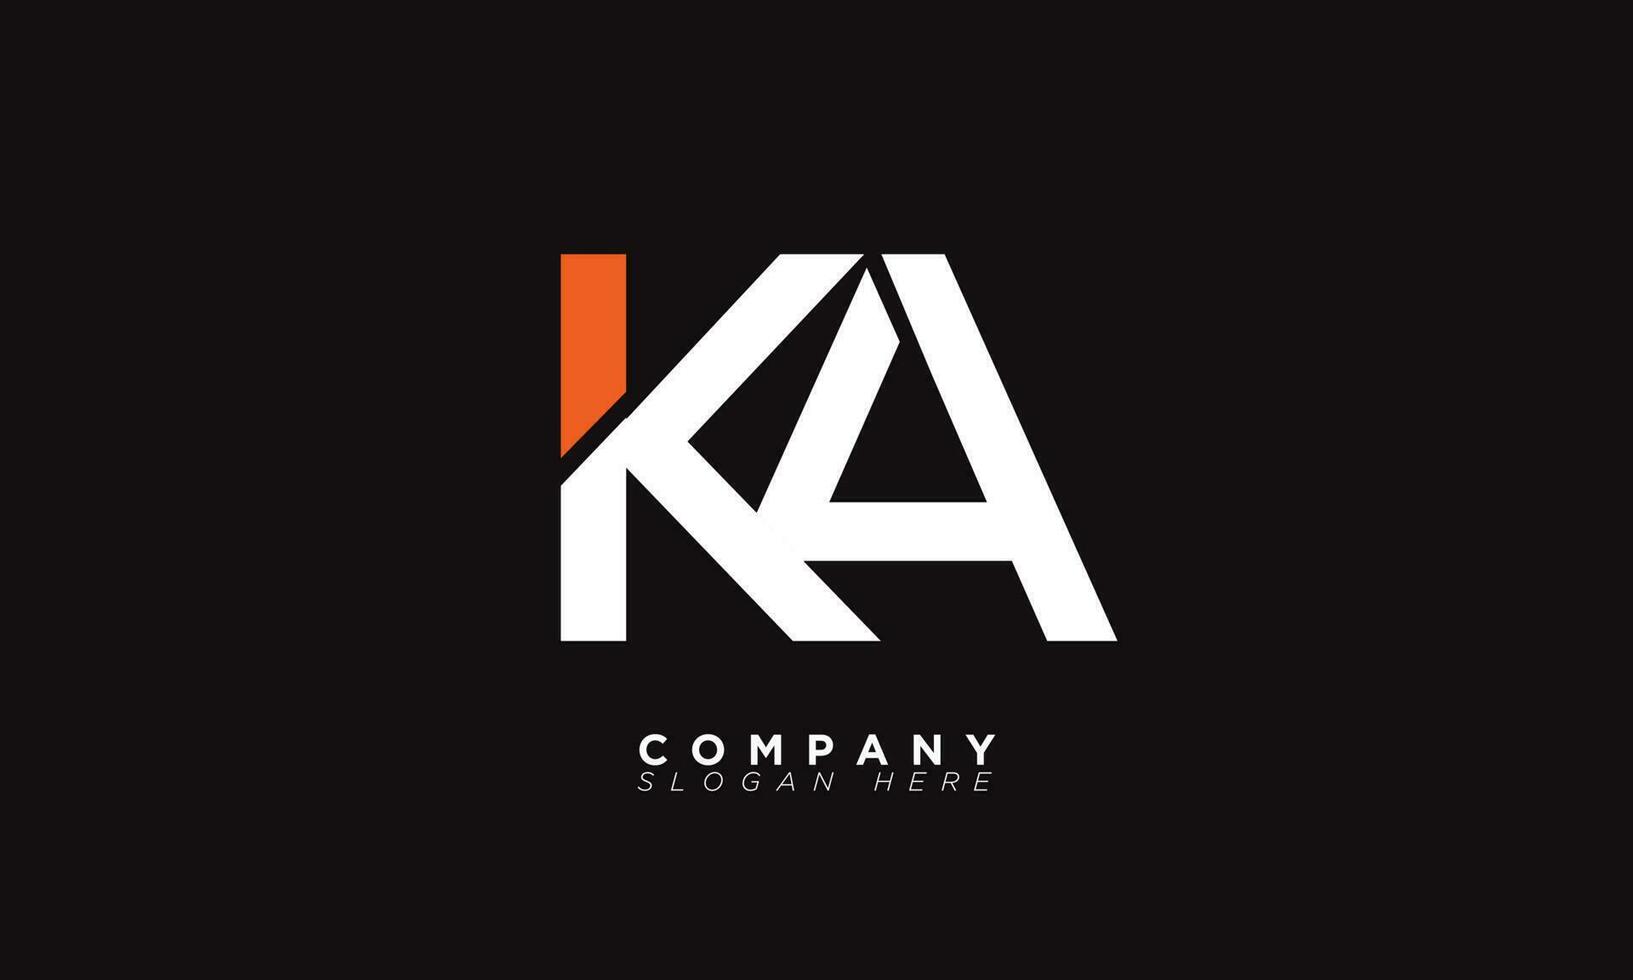 KA Alphabet letters Initials Monogram logo AK, K and A vector